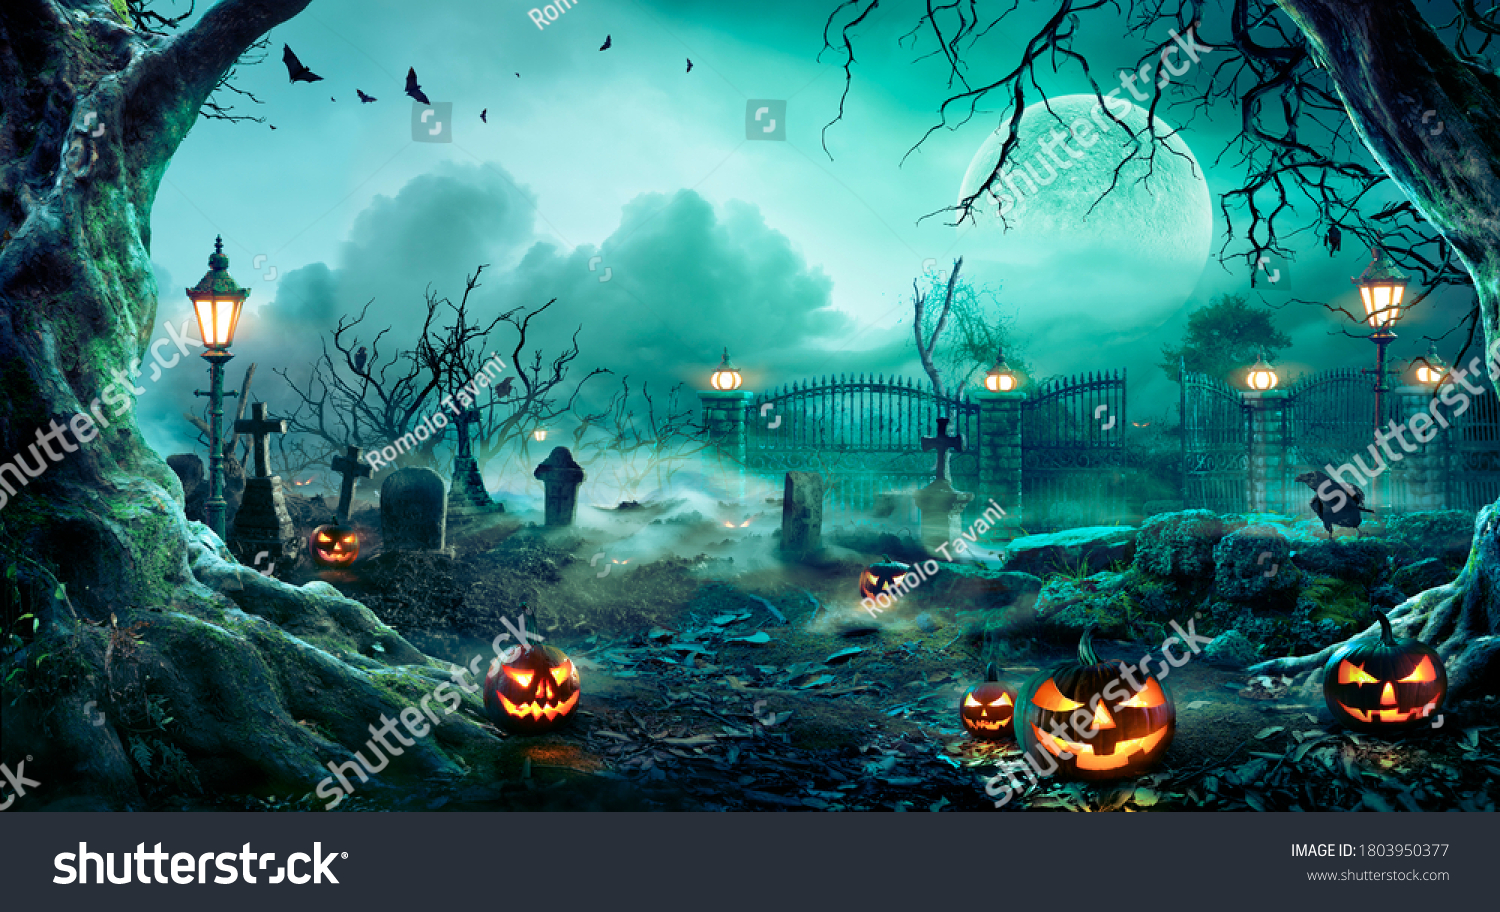 Pumpkins In Graveyard In The Spooky Night - Halloween Backdrop #1803950377